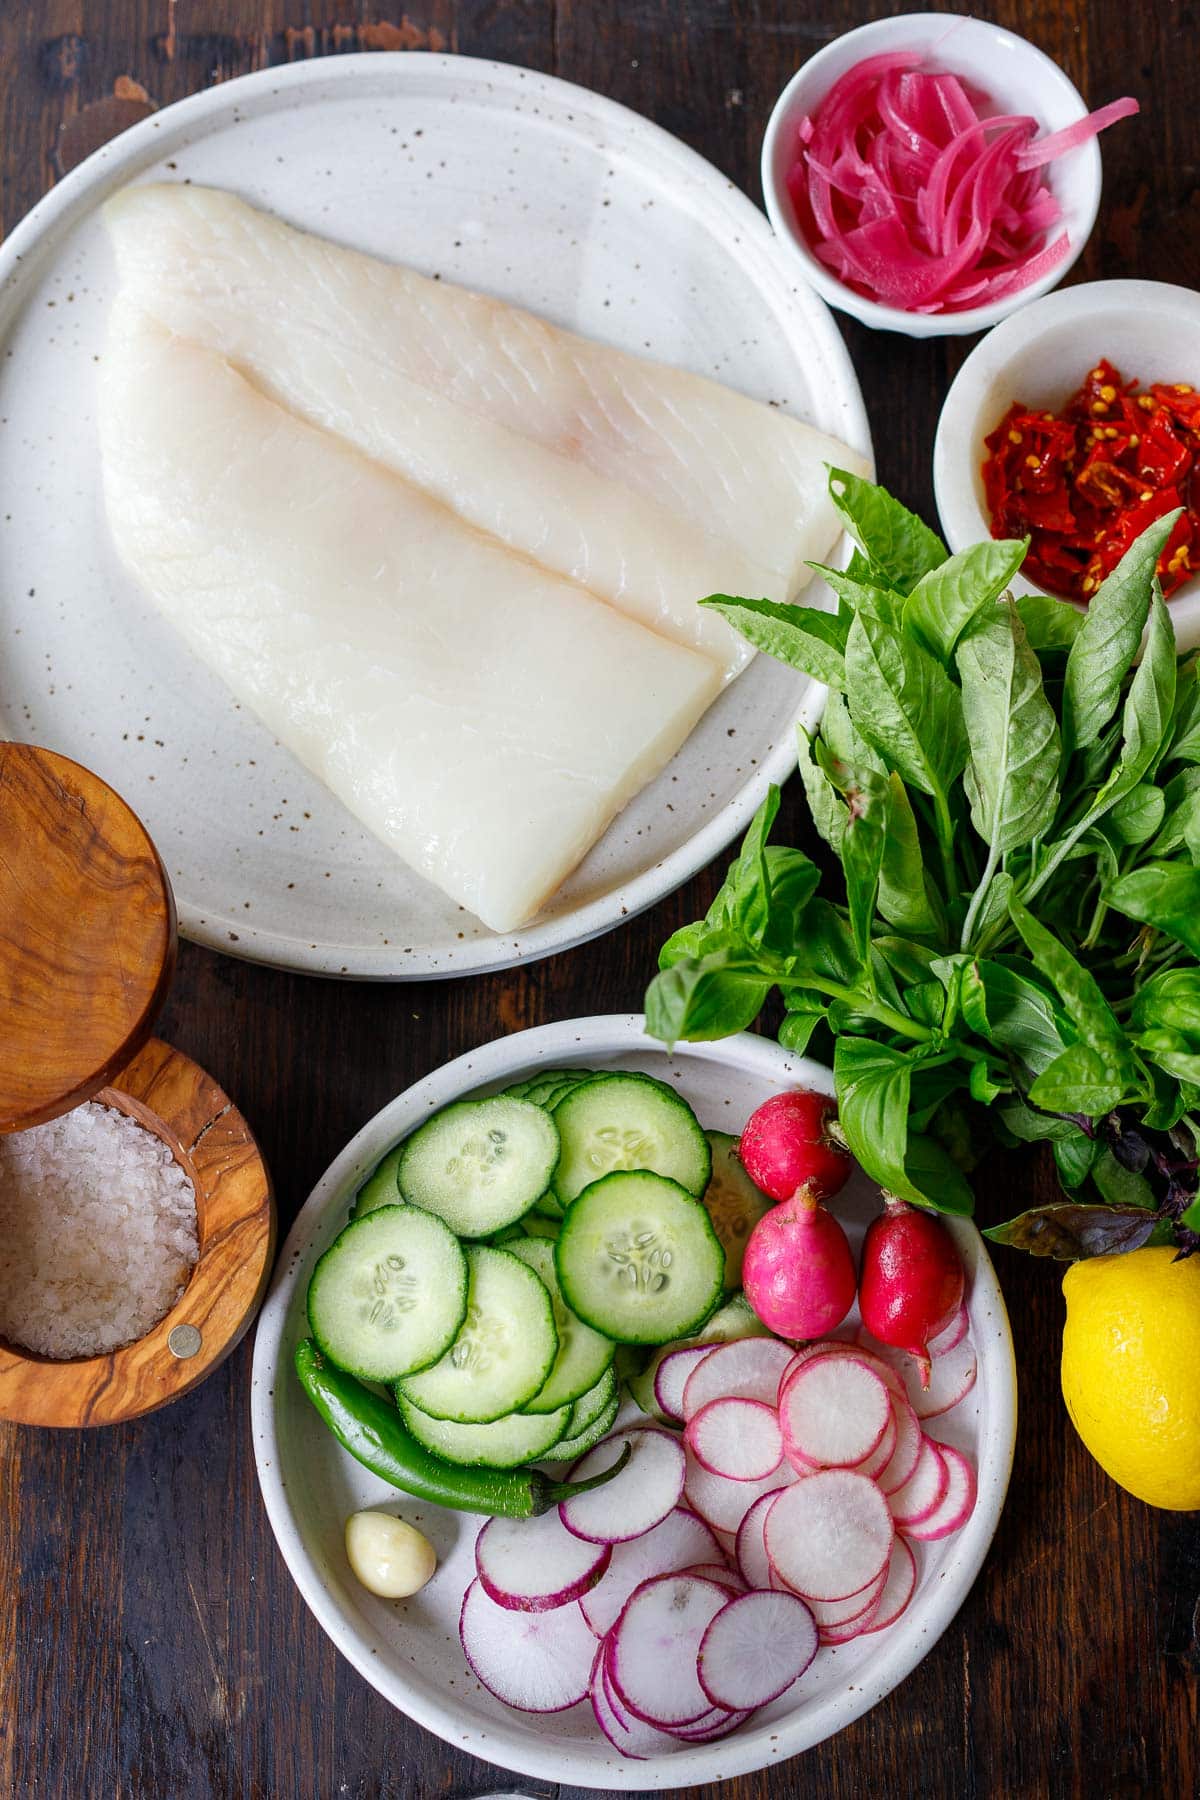 Crudo Ingredients: raw fish, fresh vegetables and herbs arranged to make crudo.